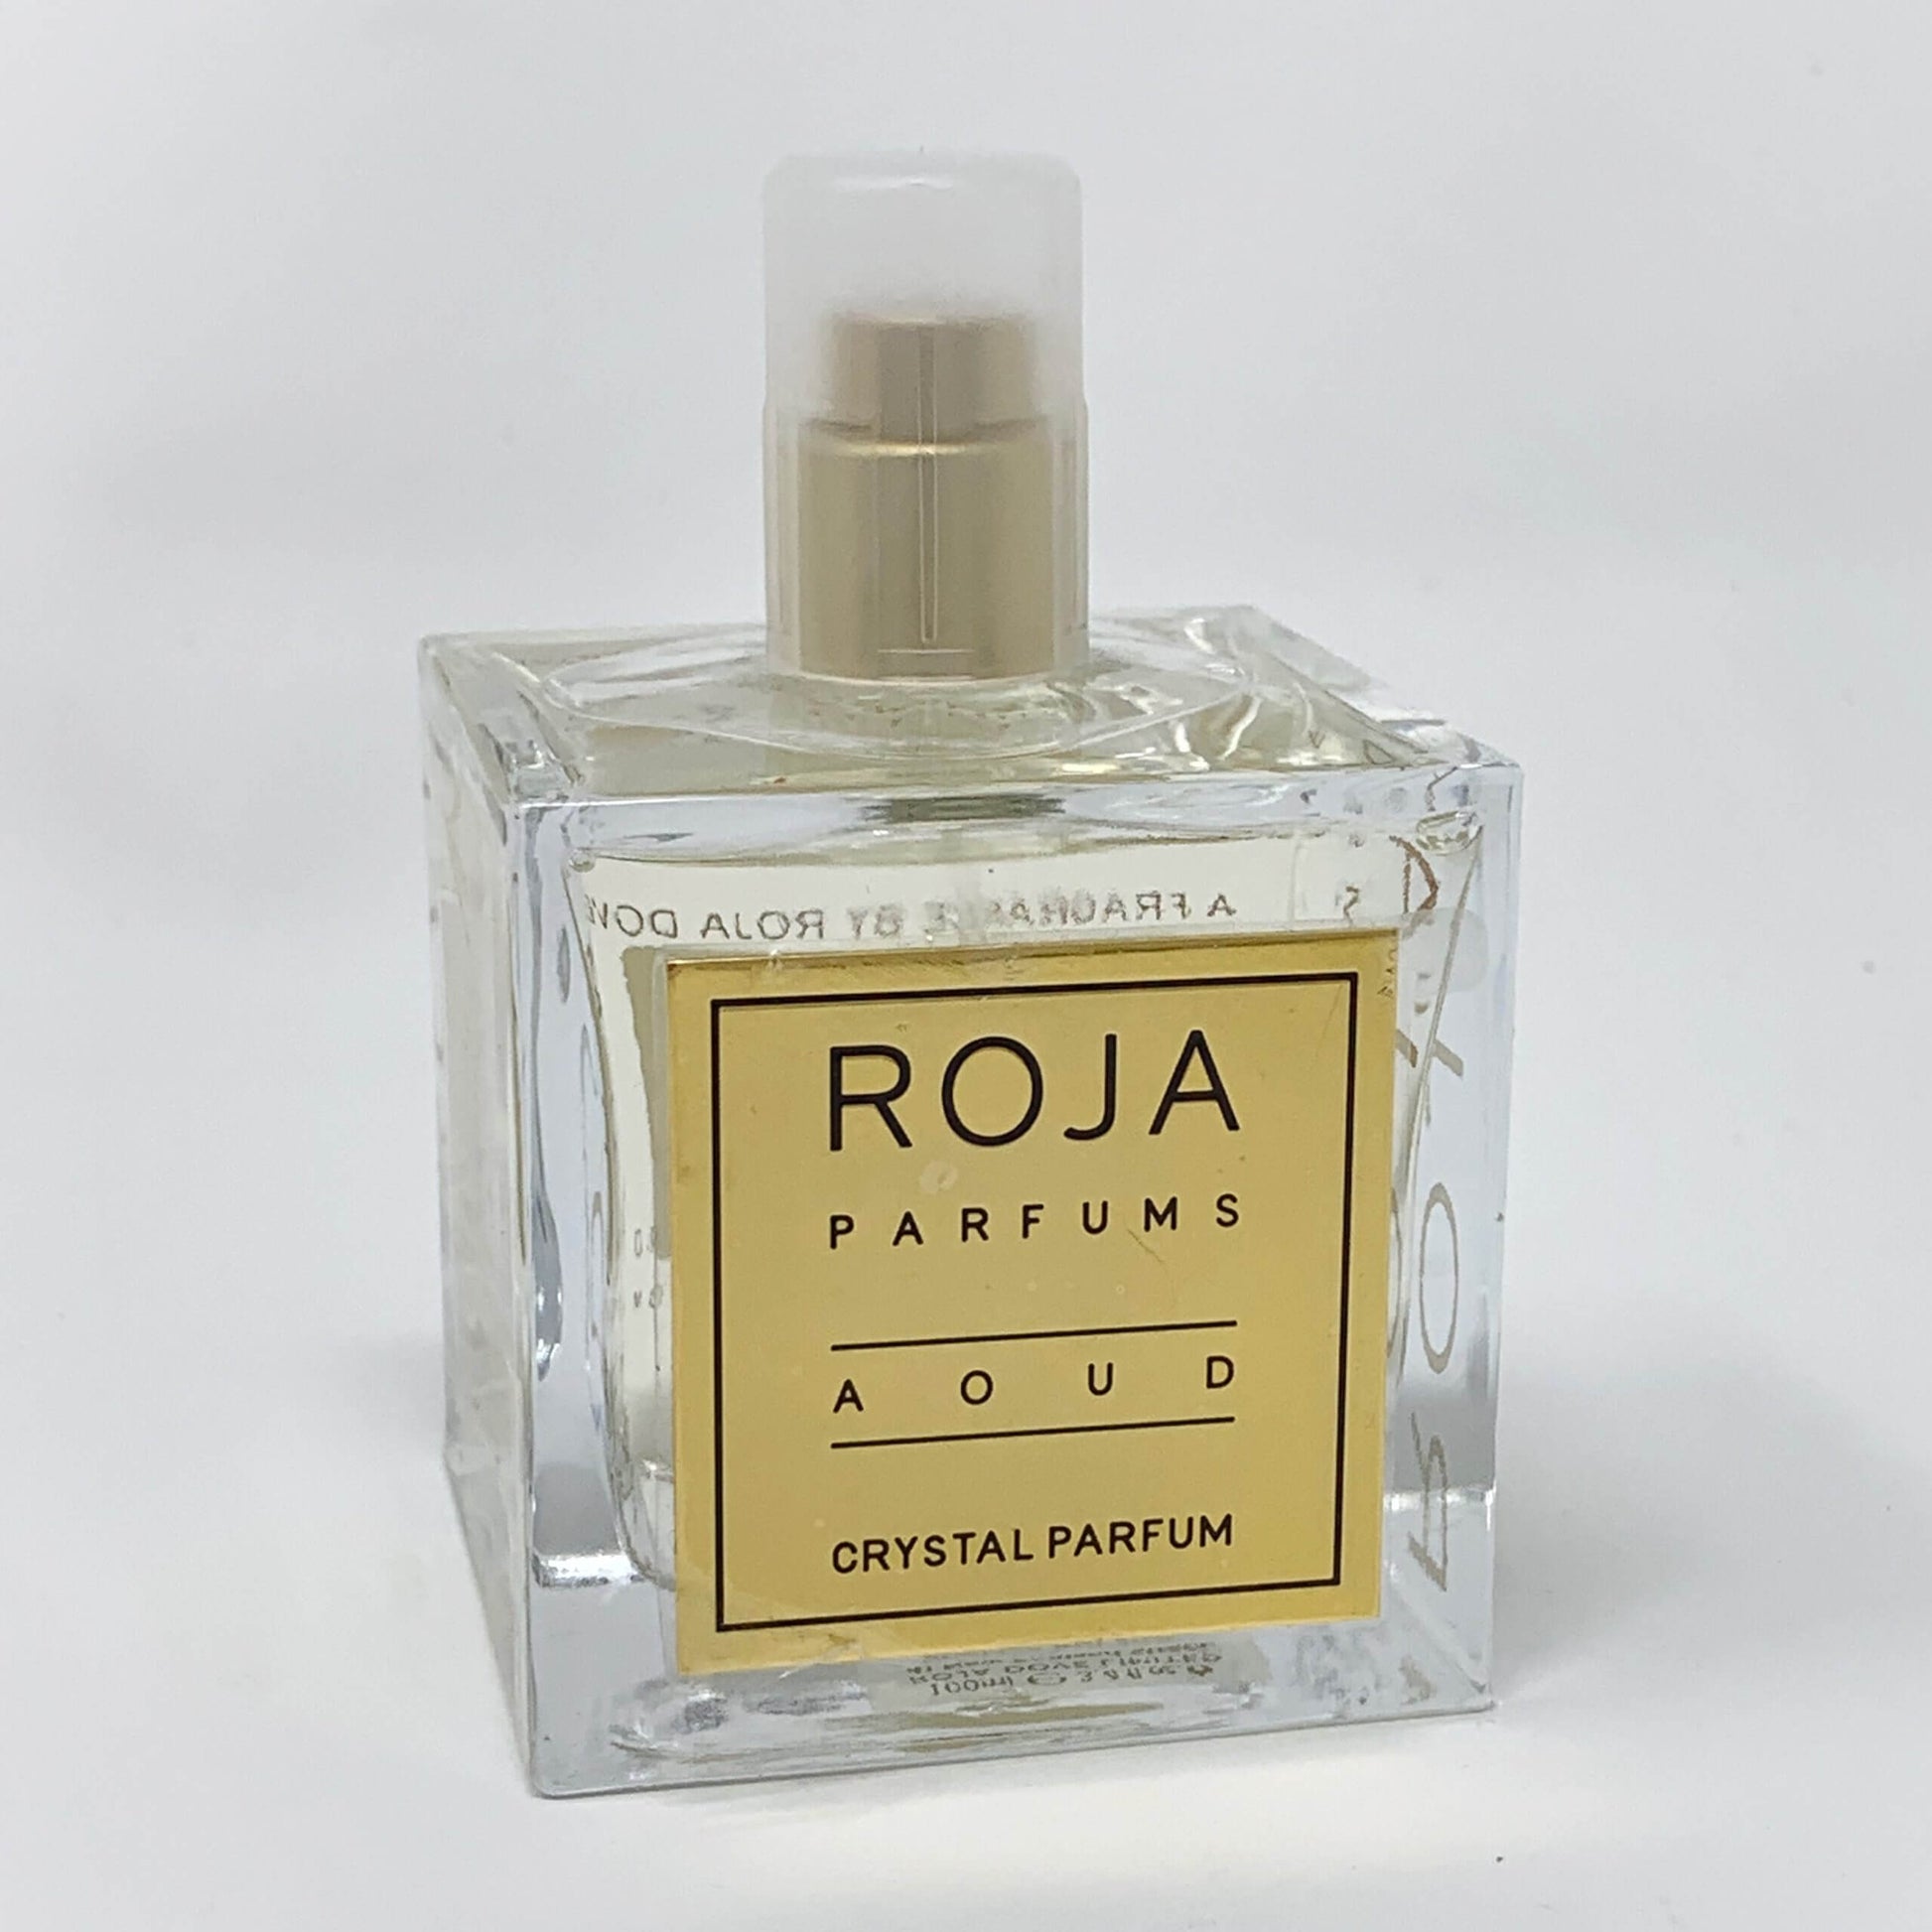 Roja - Aoud Crystal Parfum